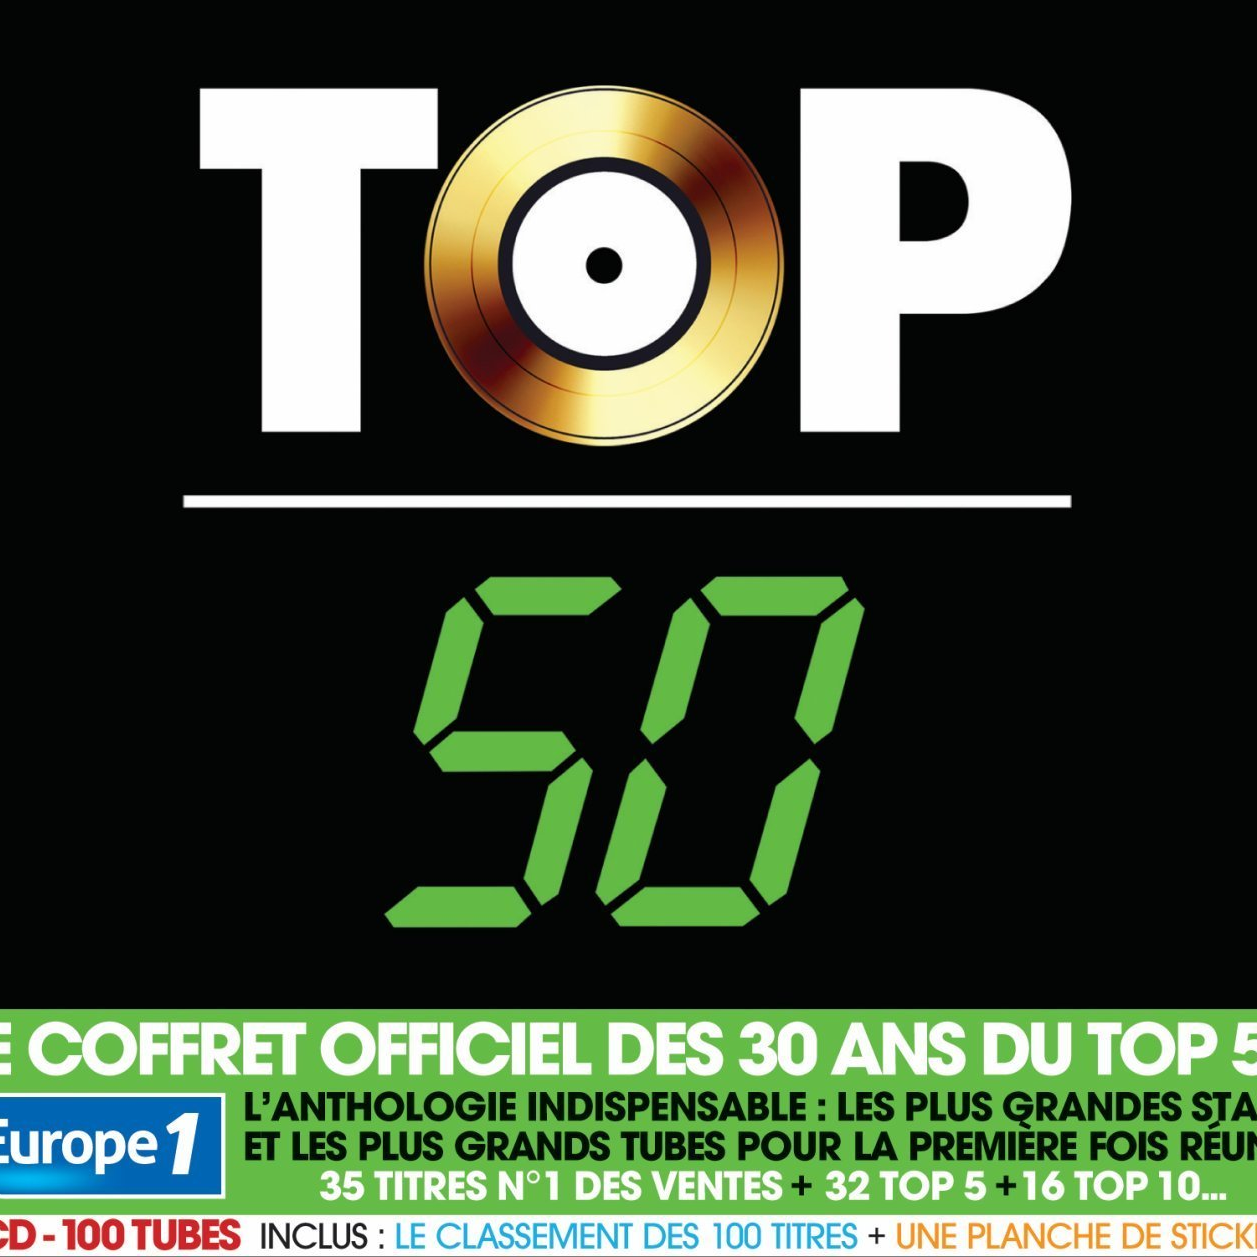 Радио топ 50. Обложка top10. Top50-CD. Top 50.